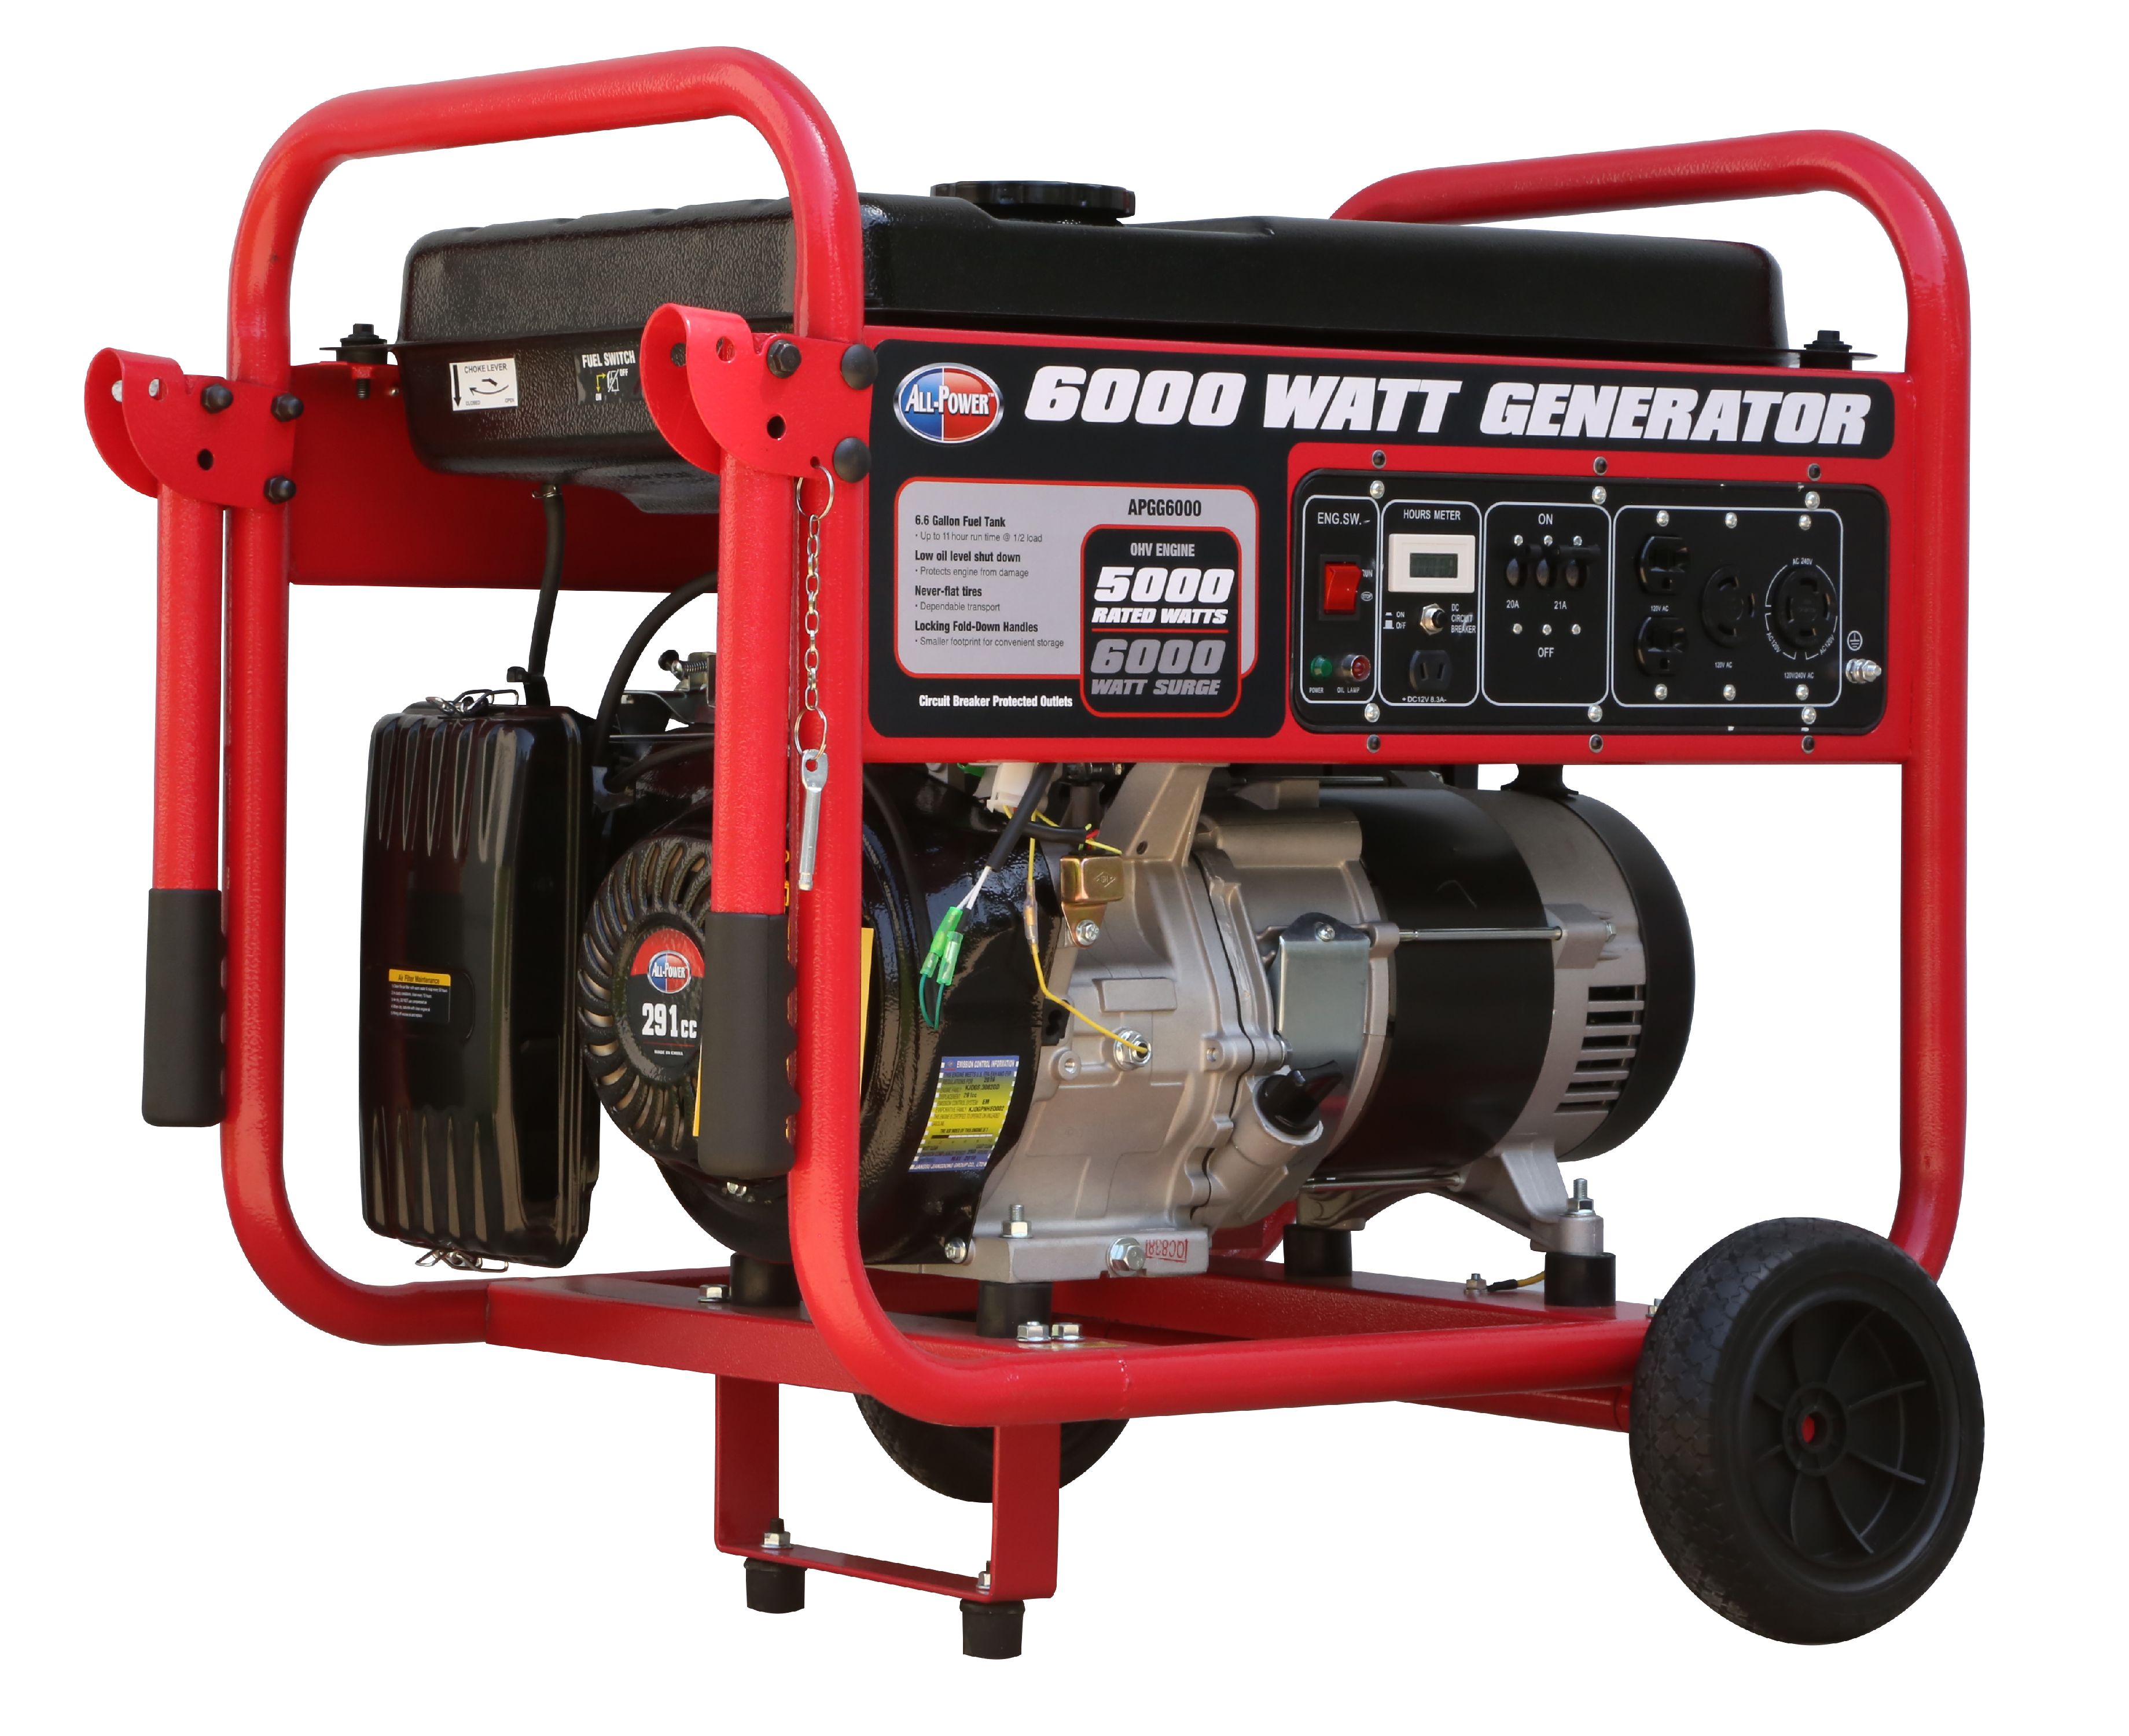 All Power 6000 Watt Generator, 6000W Gas Portable Generator for Home Use Emergency Power Backup, RV Standby, Storm Hurricane Damage Restoration Power Backup, APGG6000 - image 1 of 7